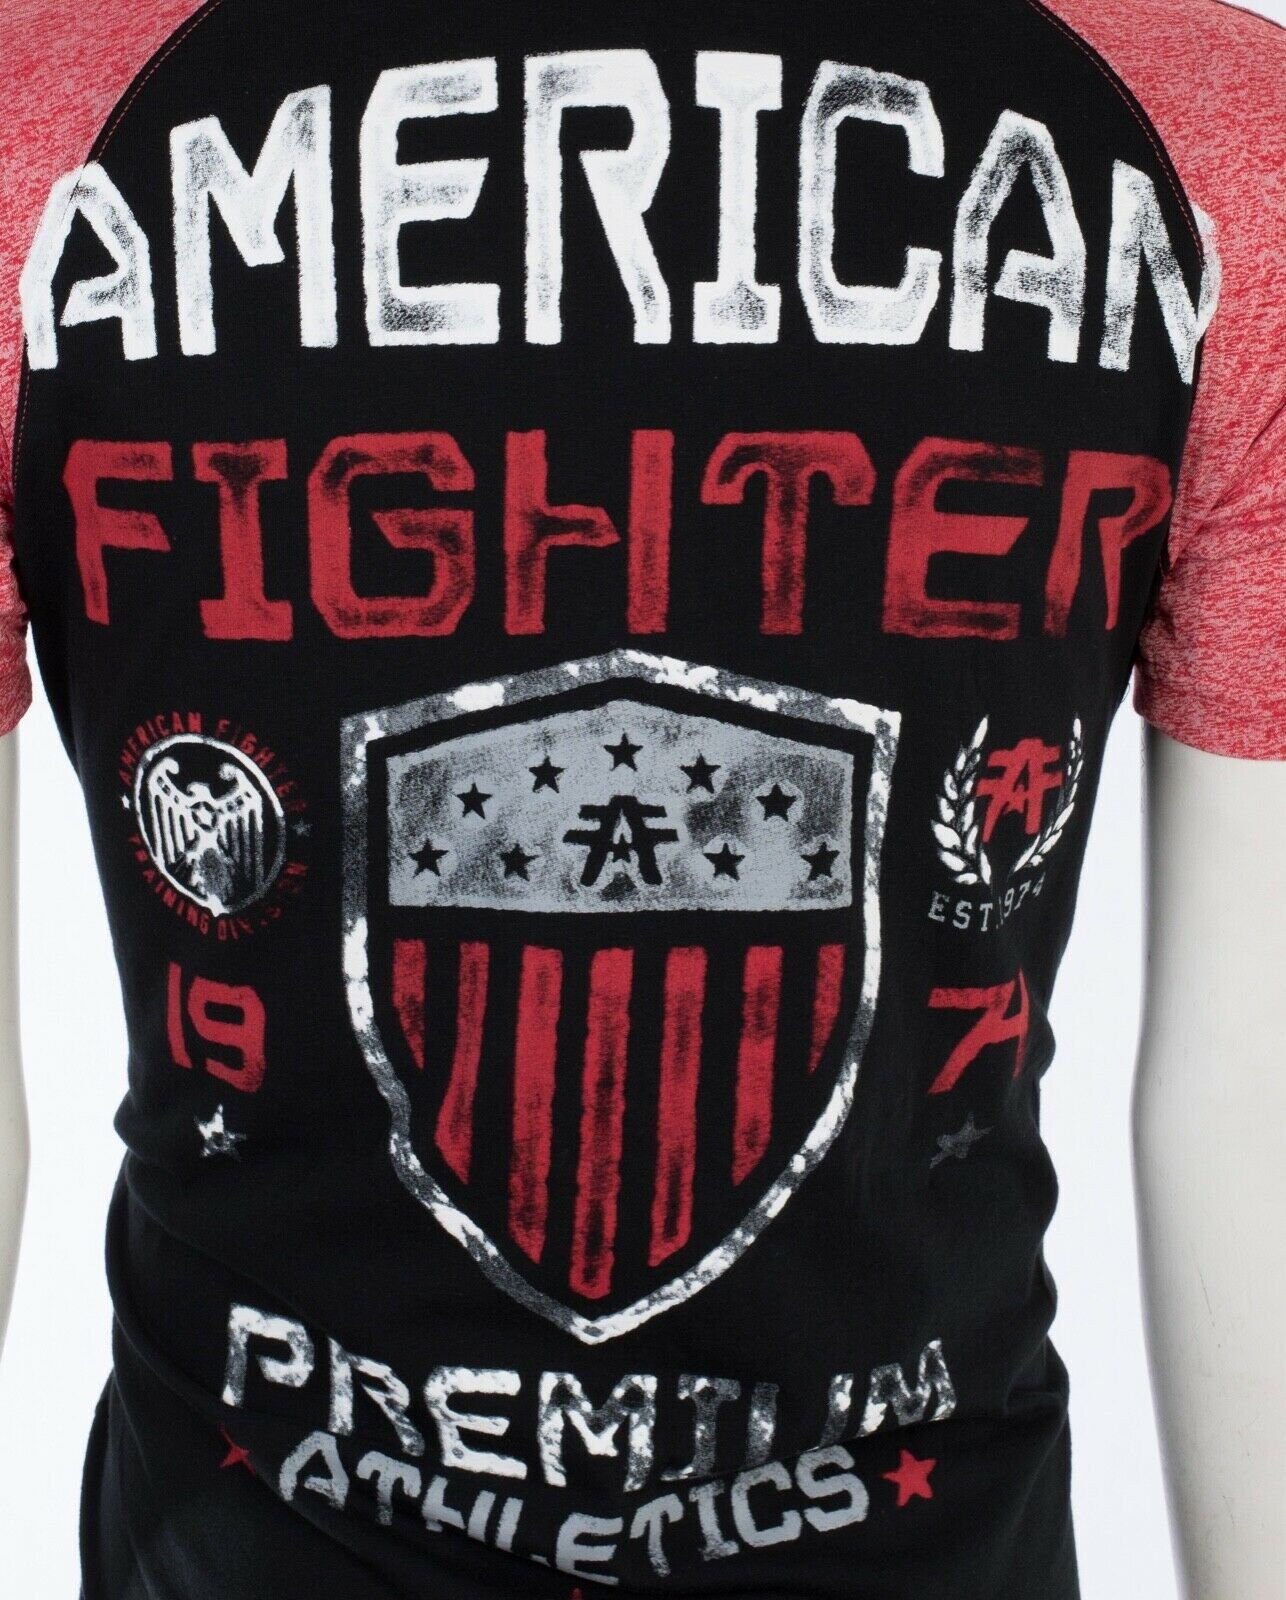 AMERICAN FIGHTER Mens T-shirt Allen Black Red